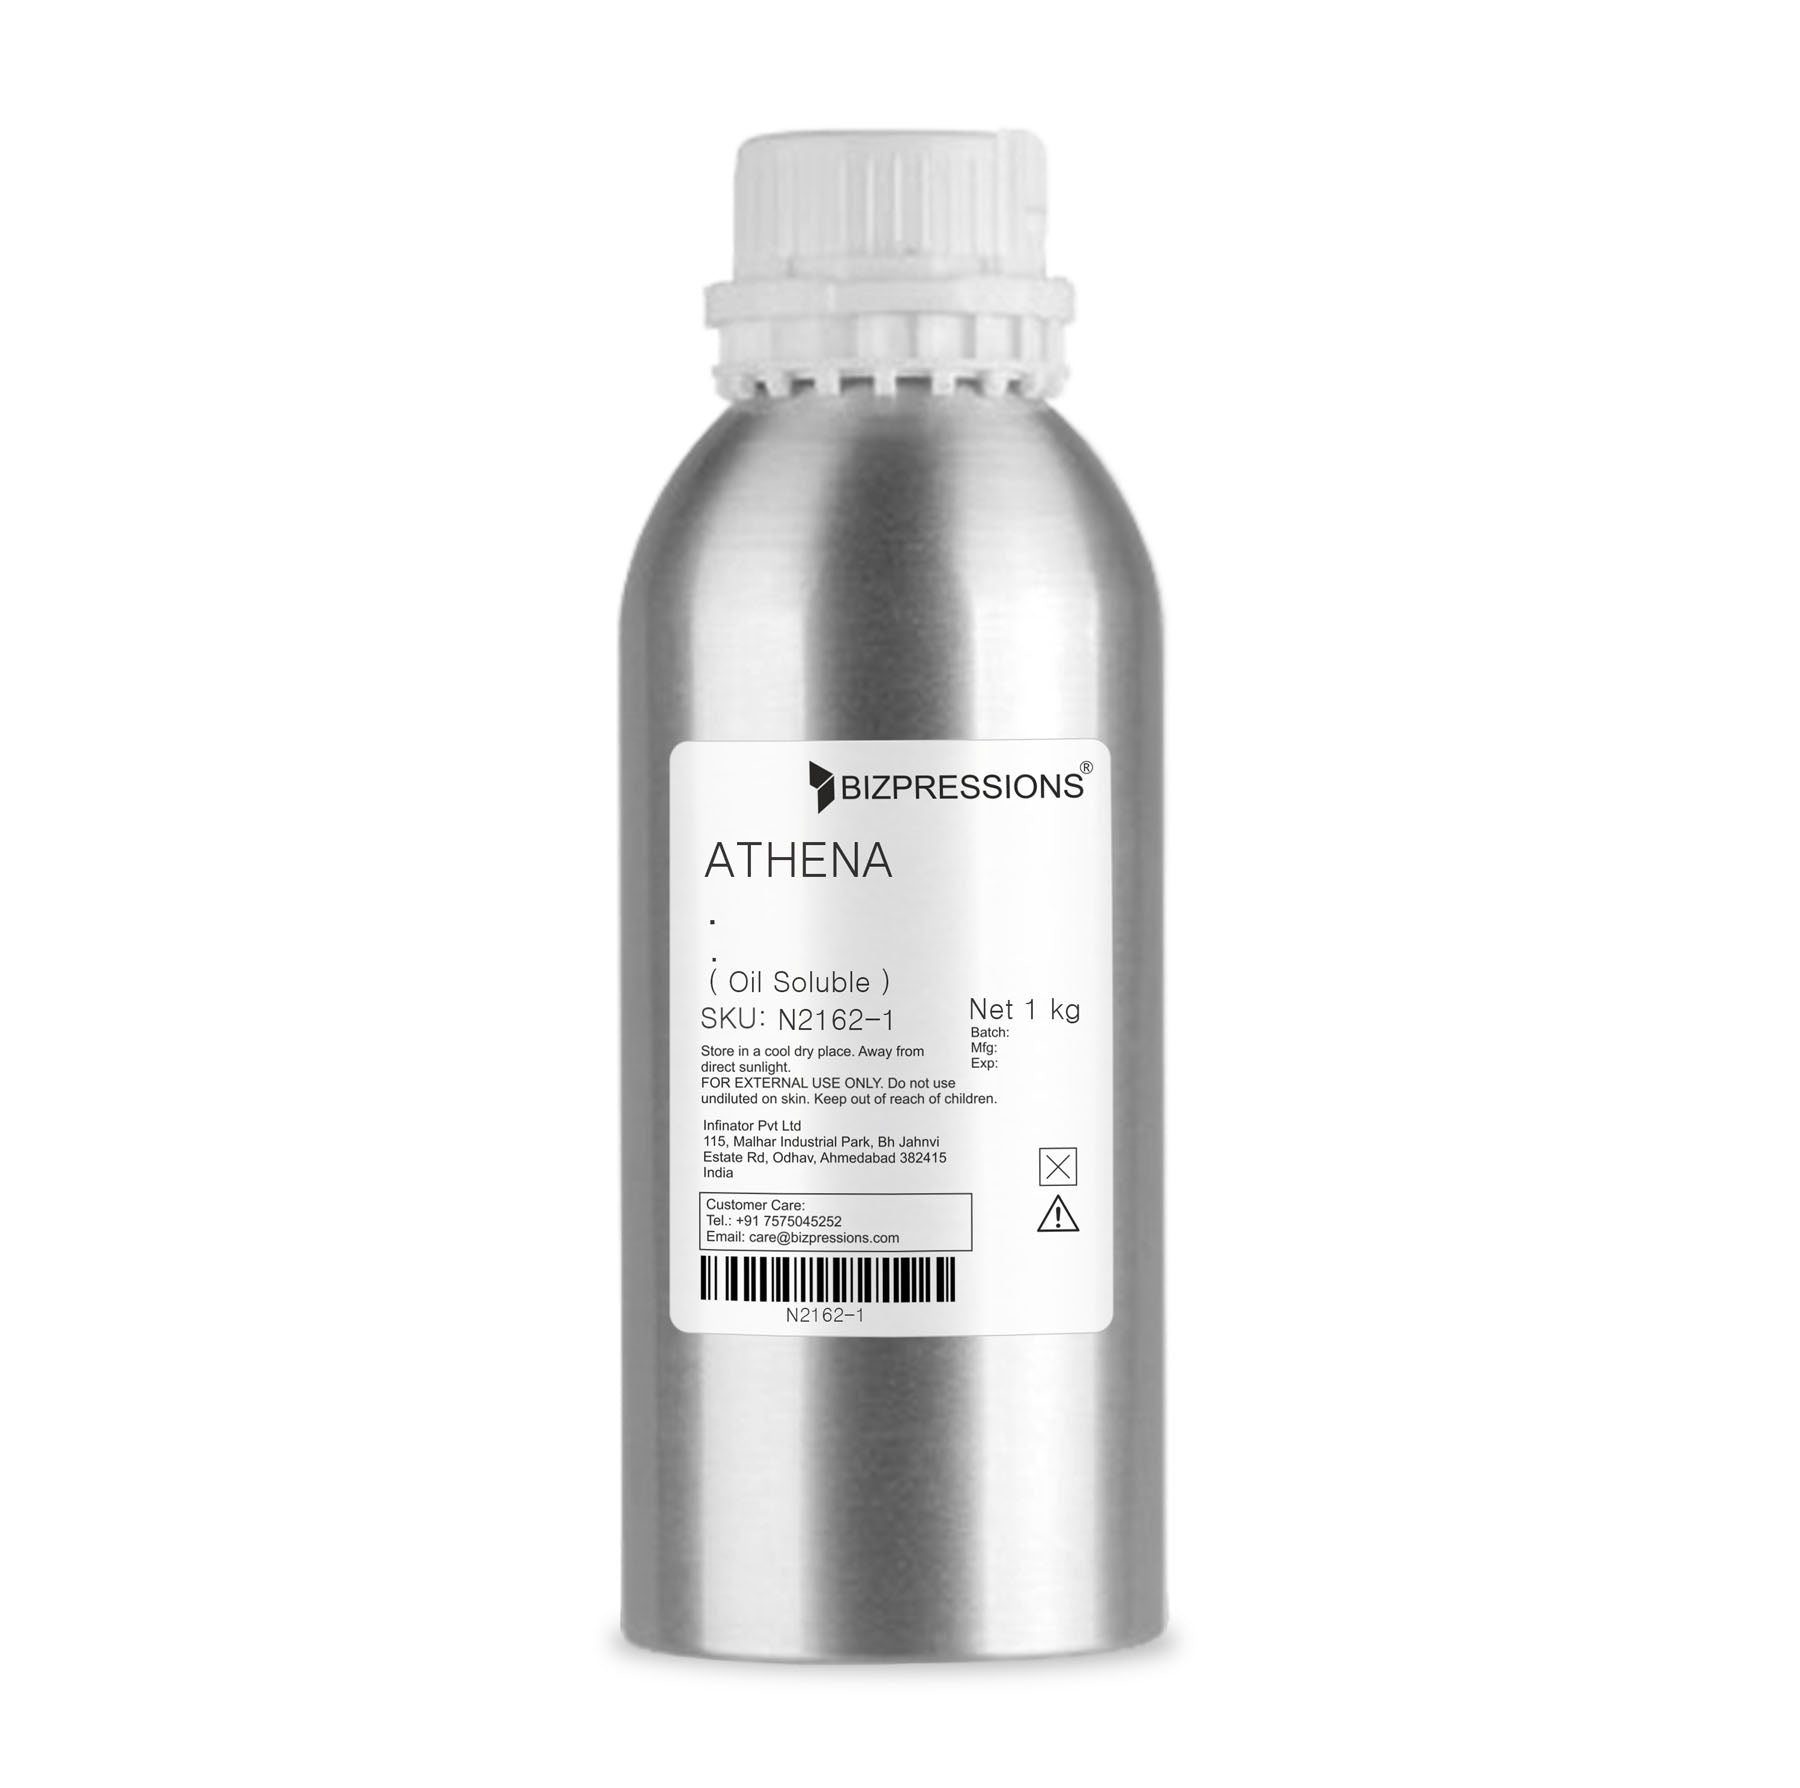 ATHENA - Fragrance ( Oil Soluble ) - 1 kg